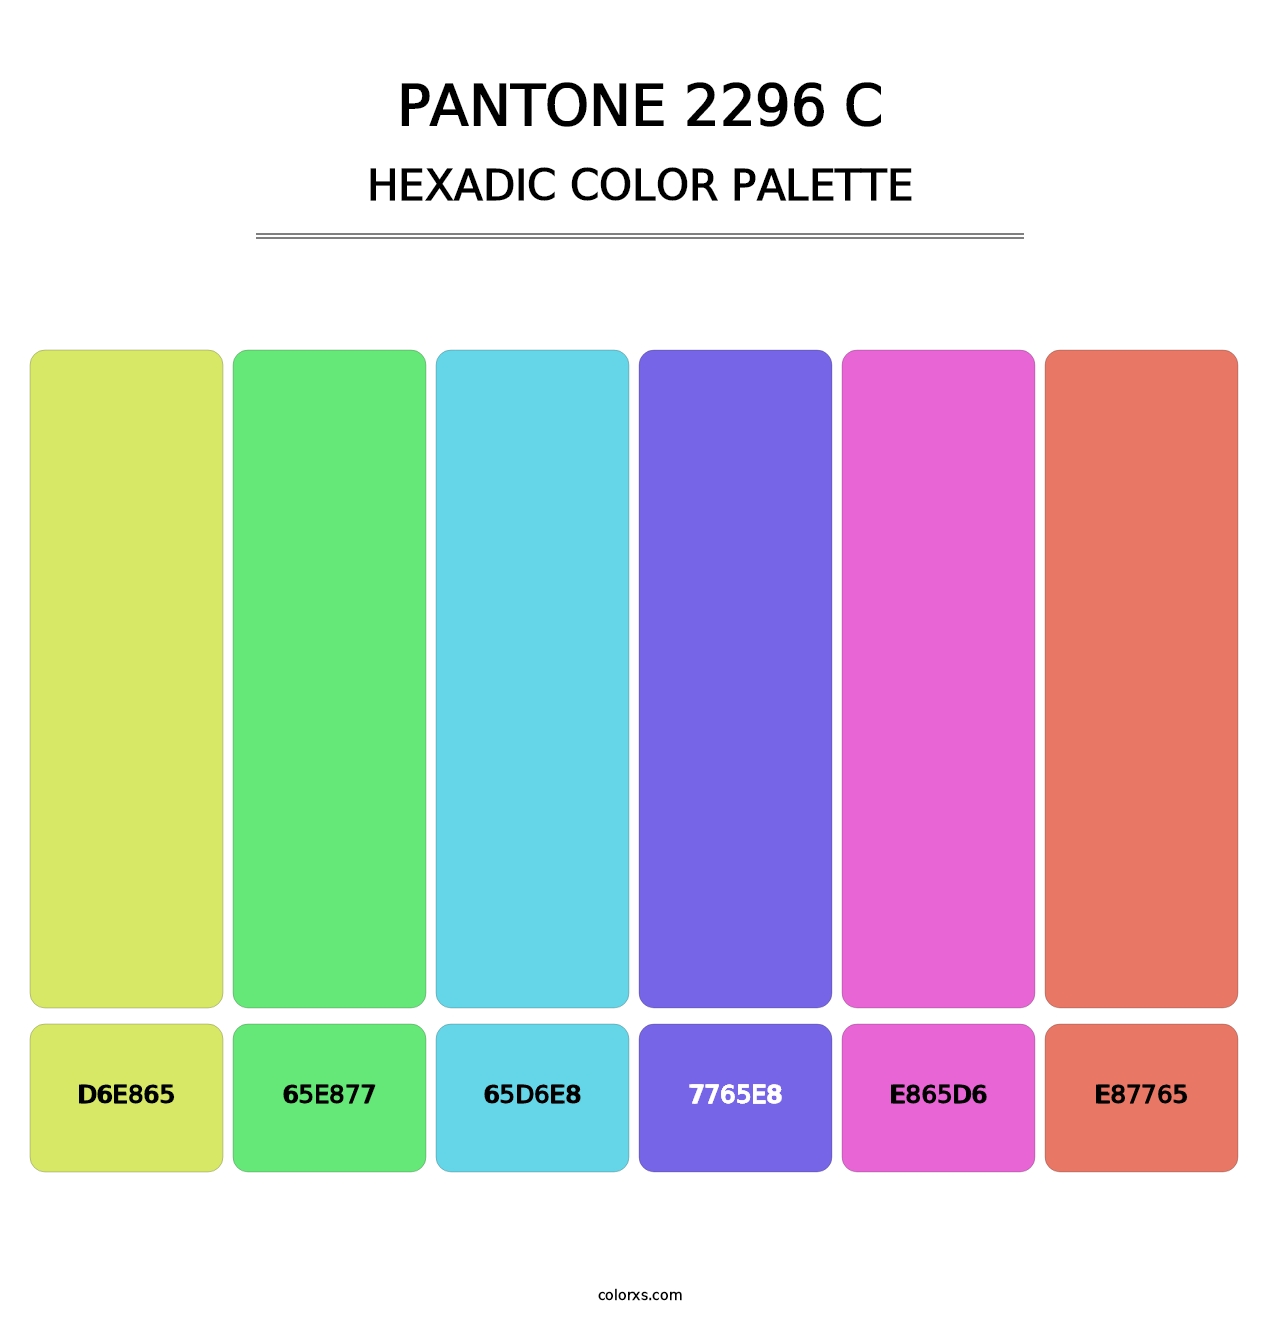 PANTONE 2296 C - Hexadic Color Palette